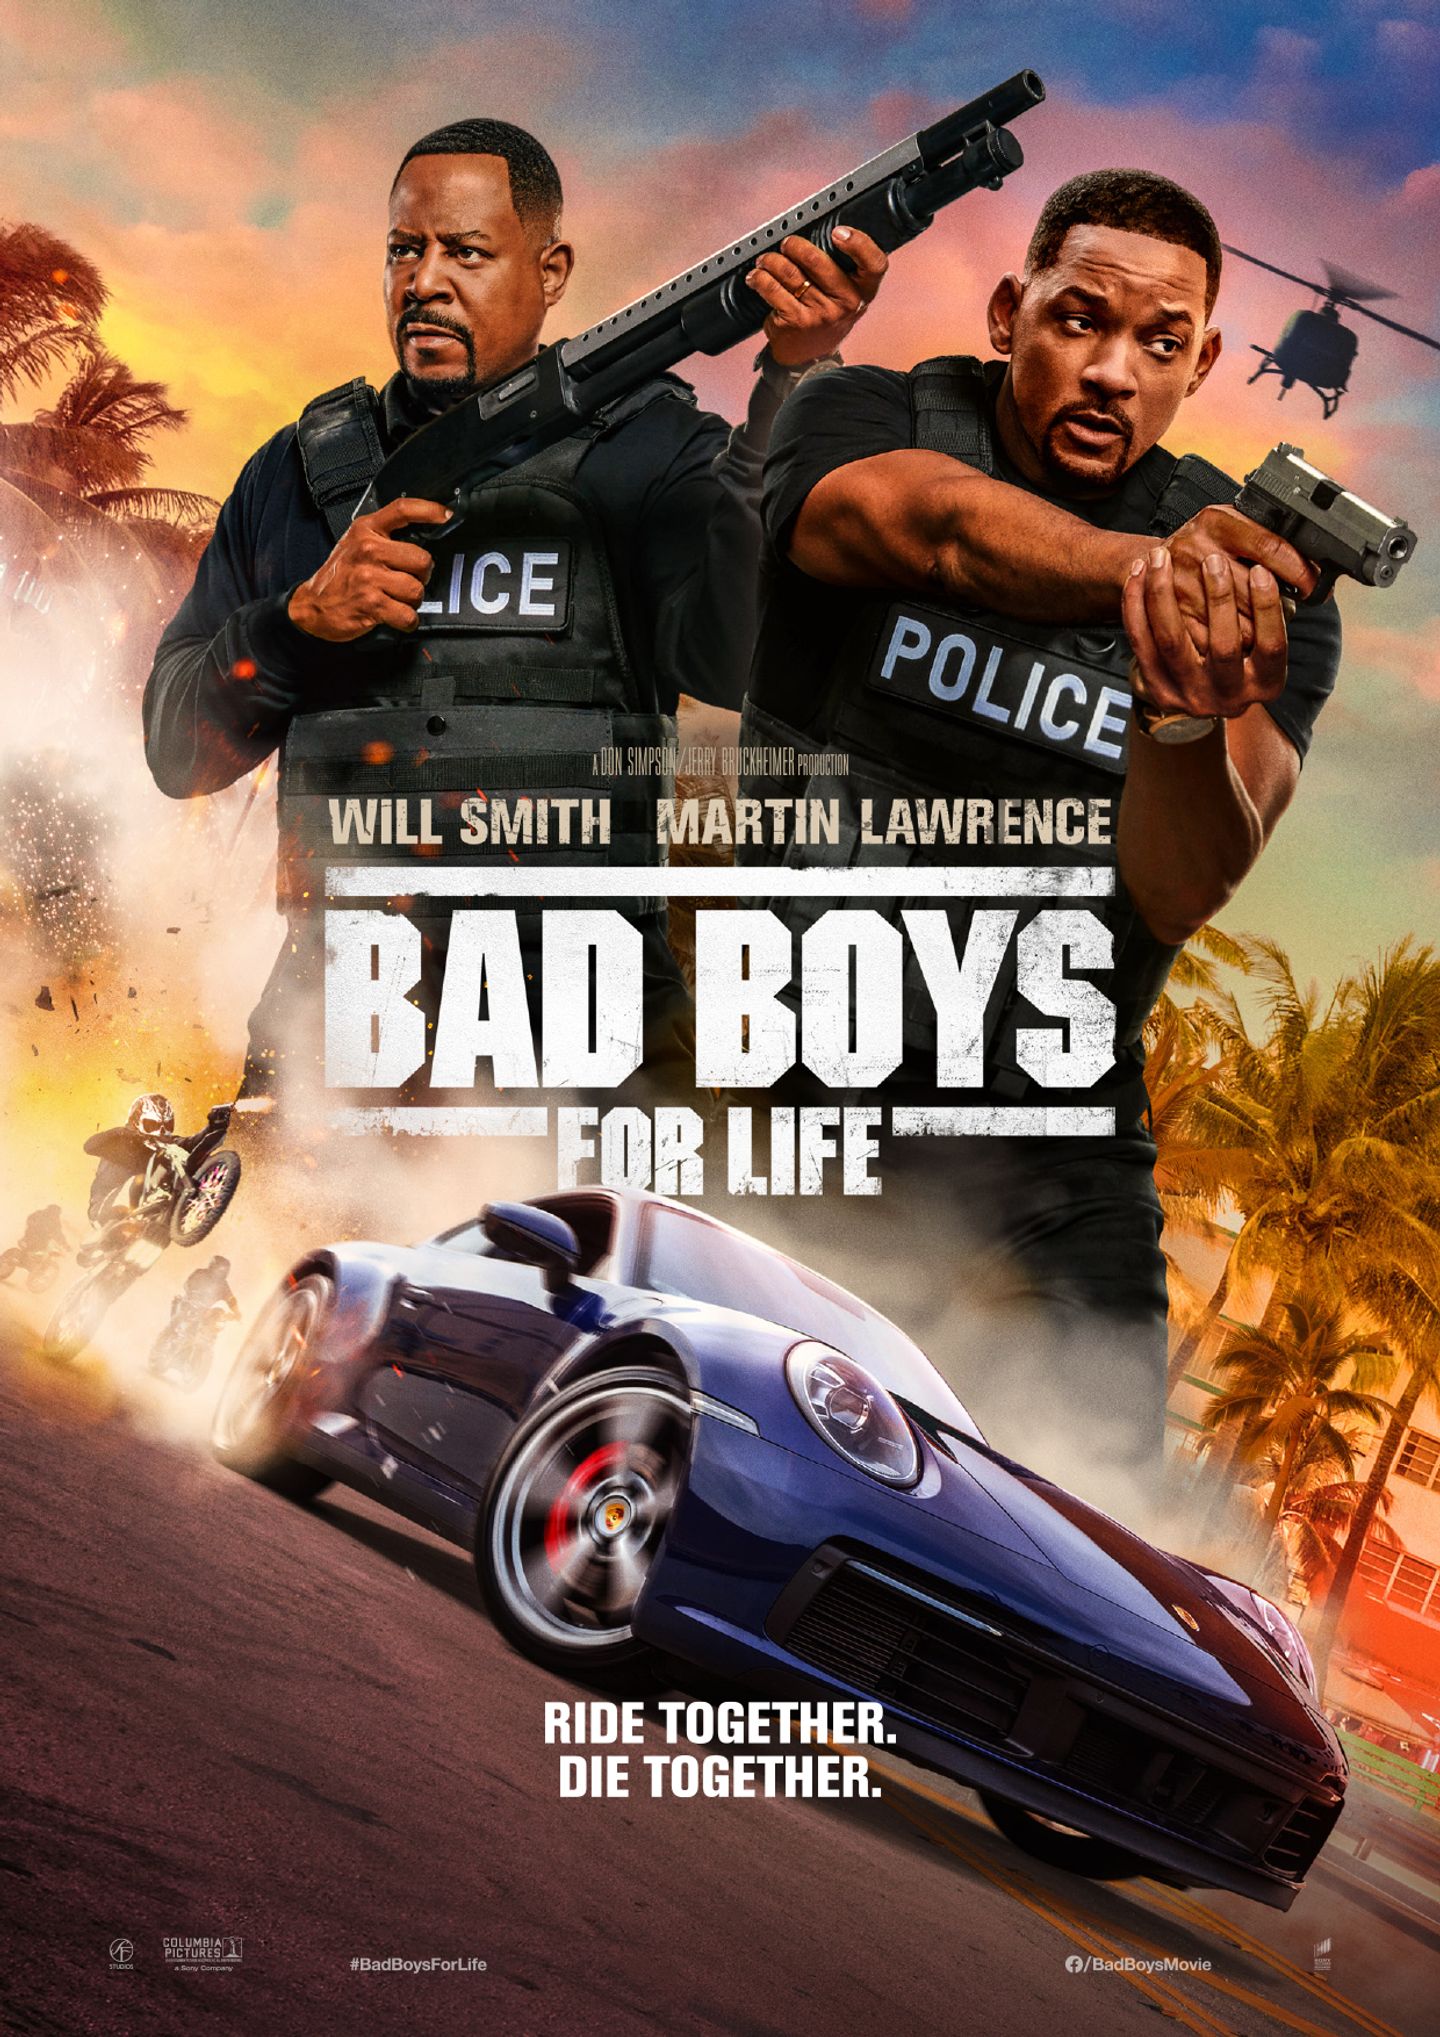 Plakat for 'Bad Boys for Life'